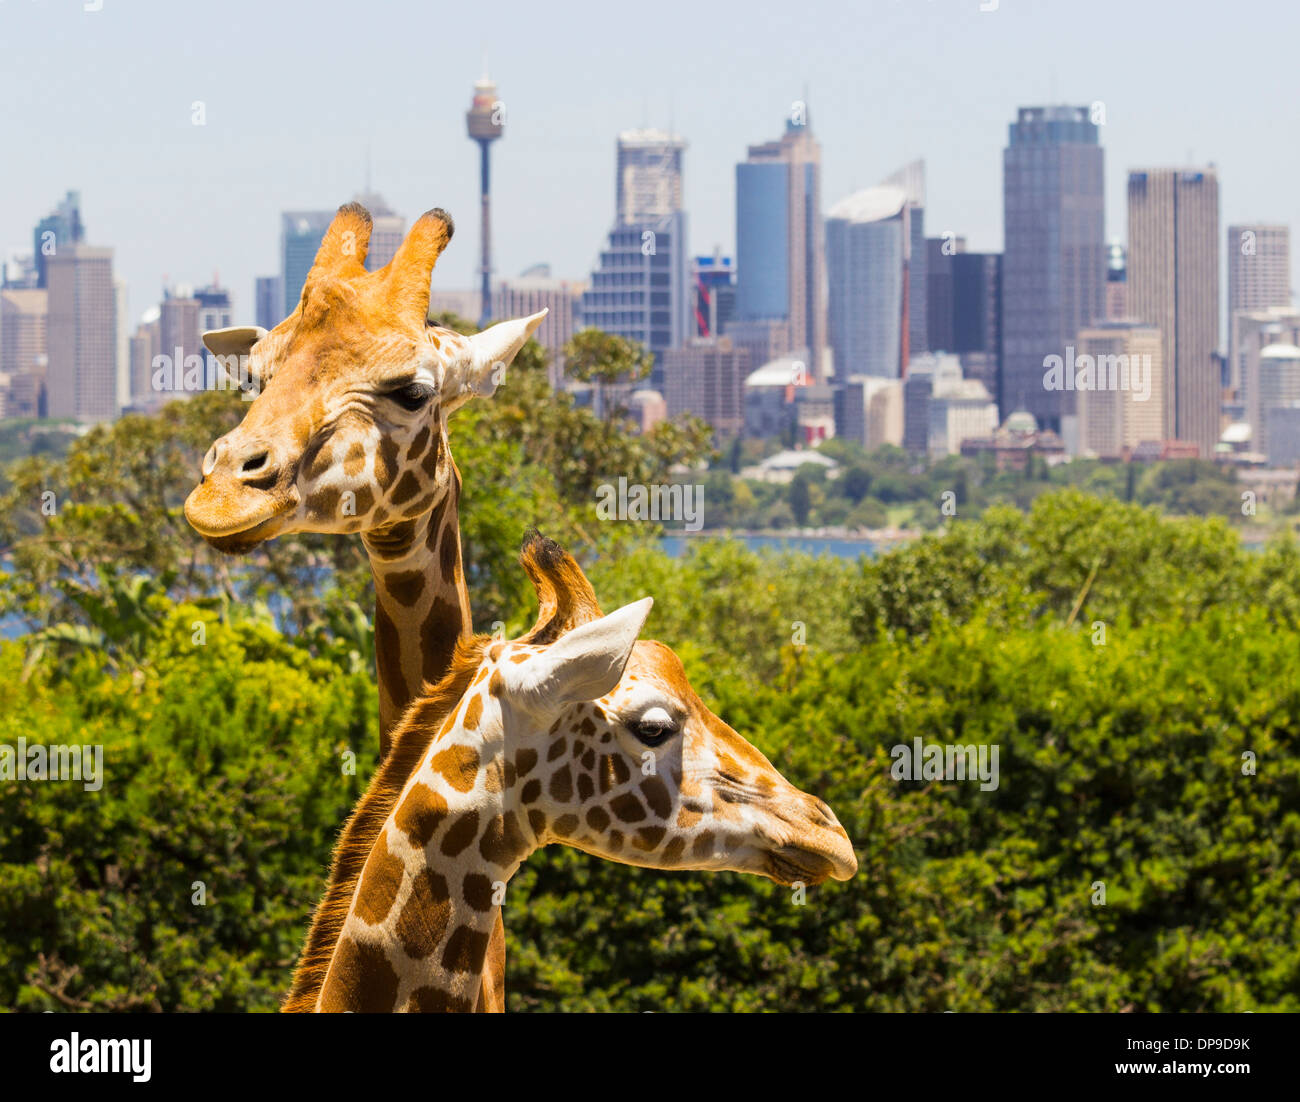 Giraffes in Taronga Zoo, Sydney, Australia with the city behind Stock Photo